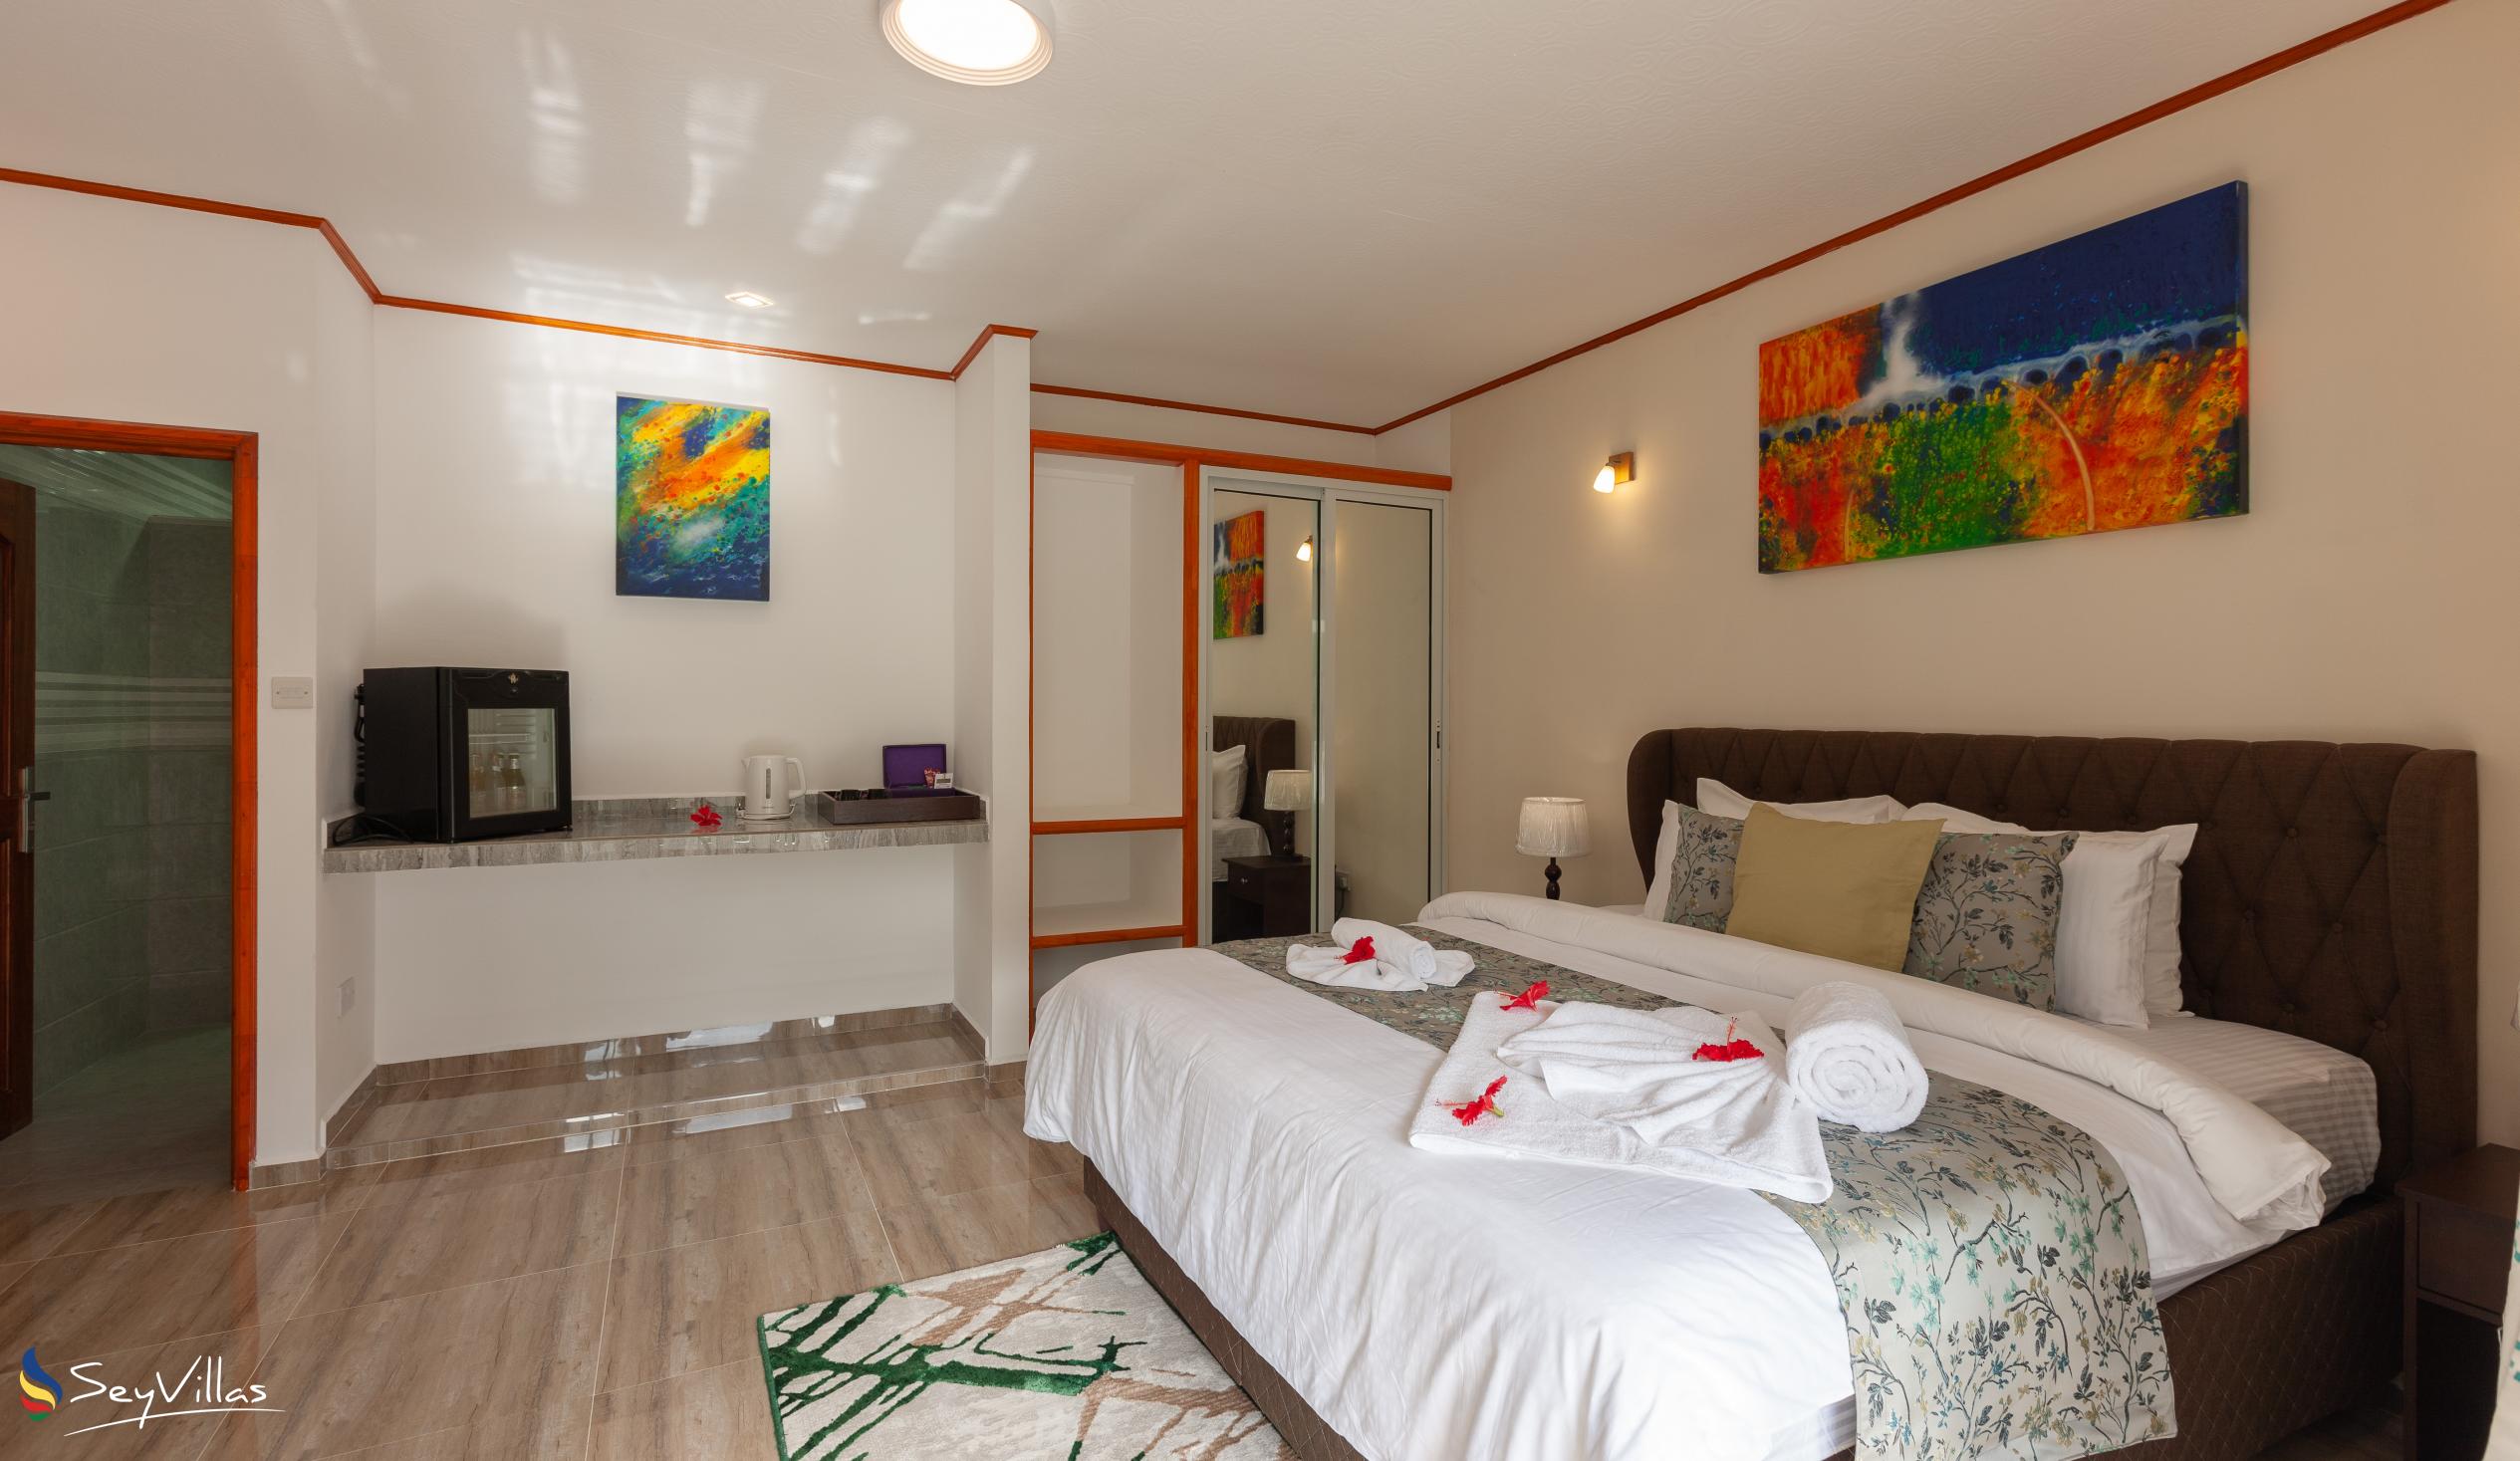 Photo 49: Mountain View Hotel - Superior Room - La Digue (Seychelles)